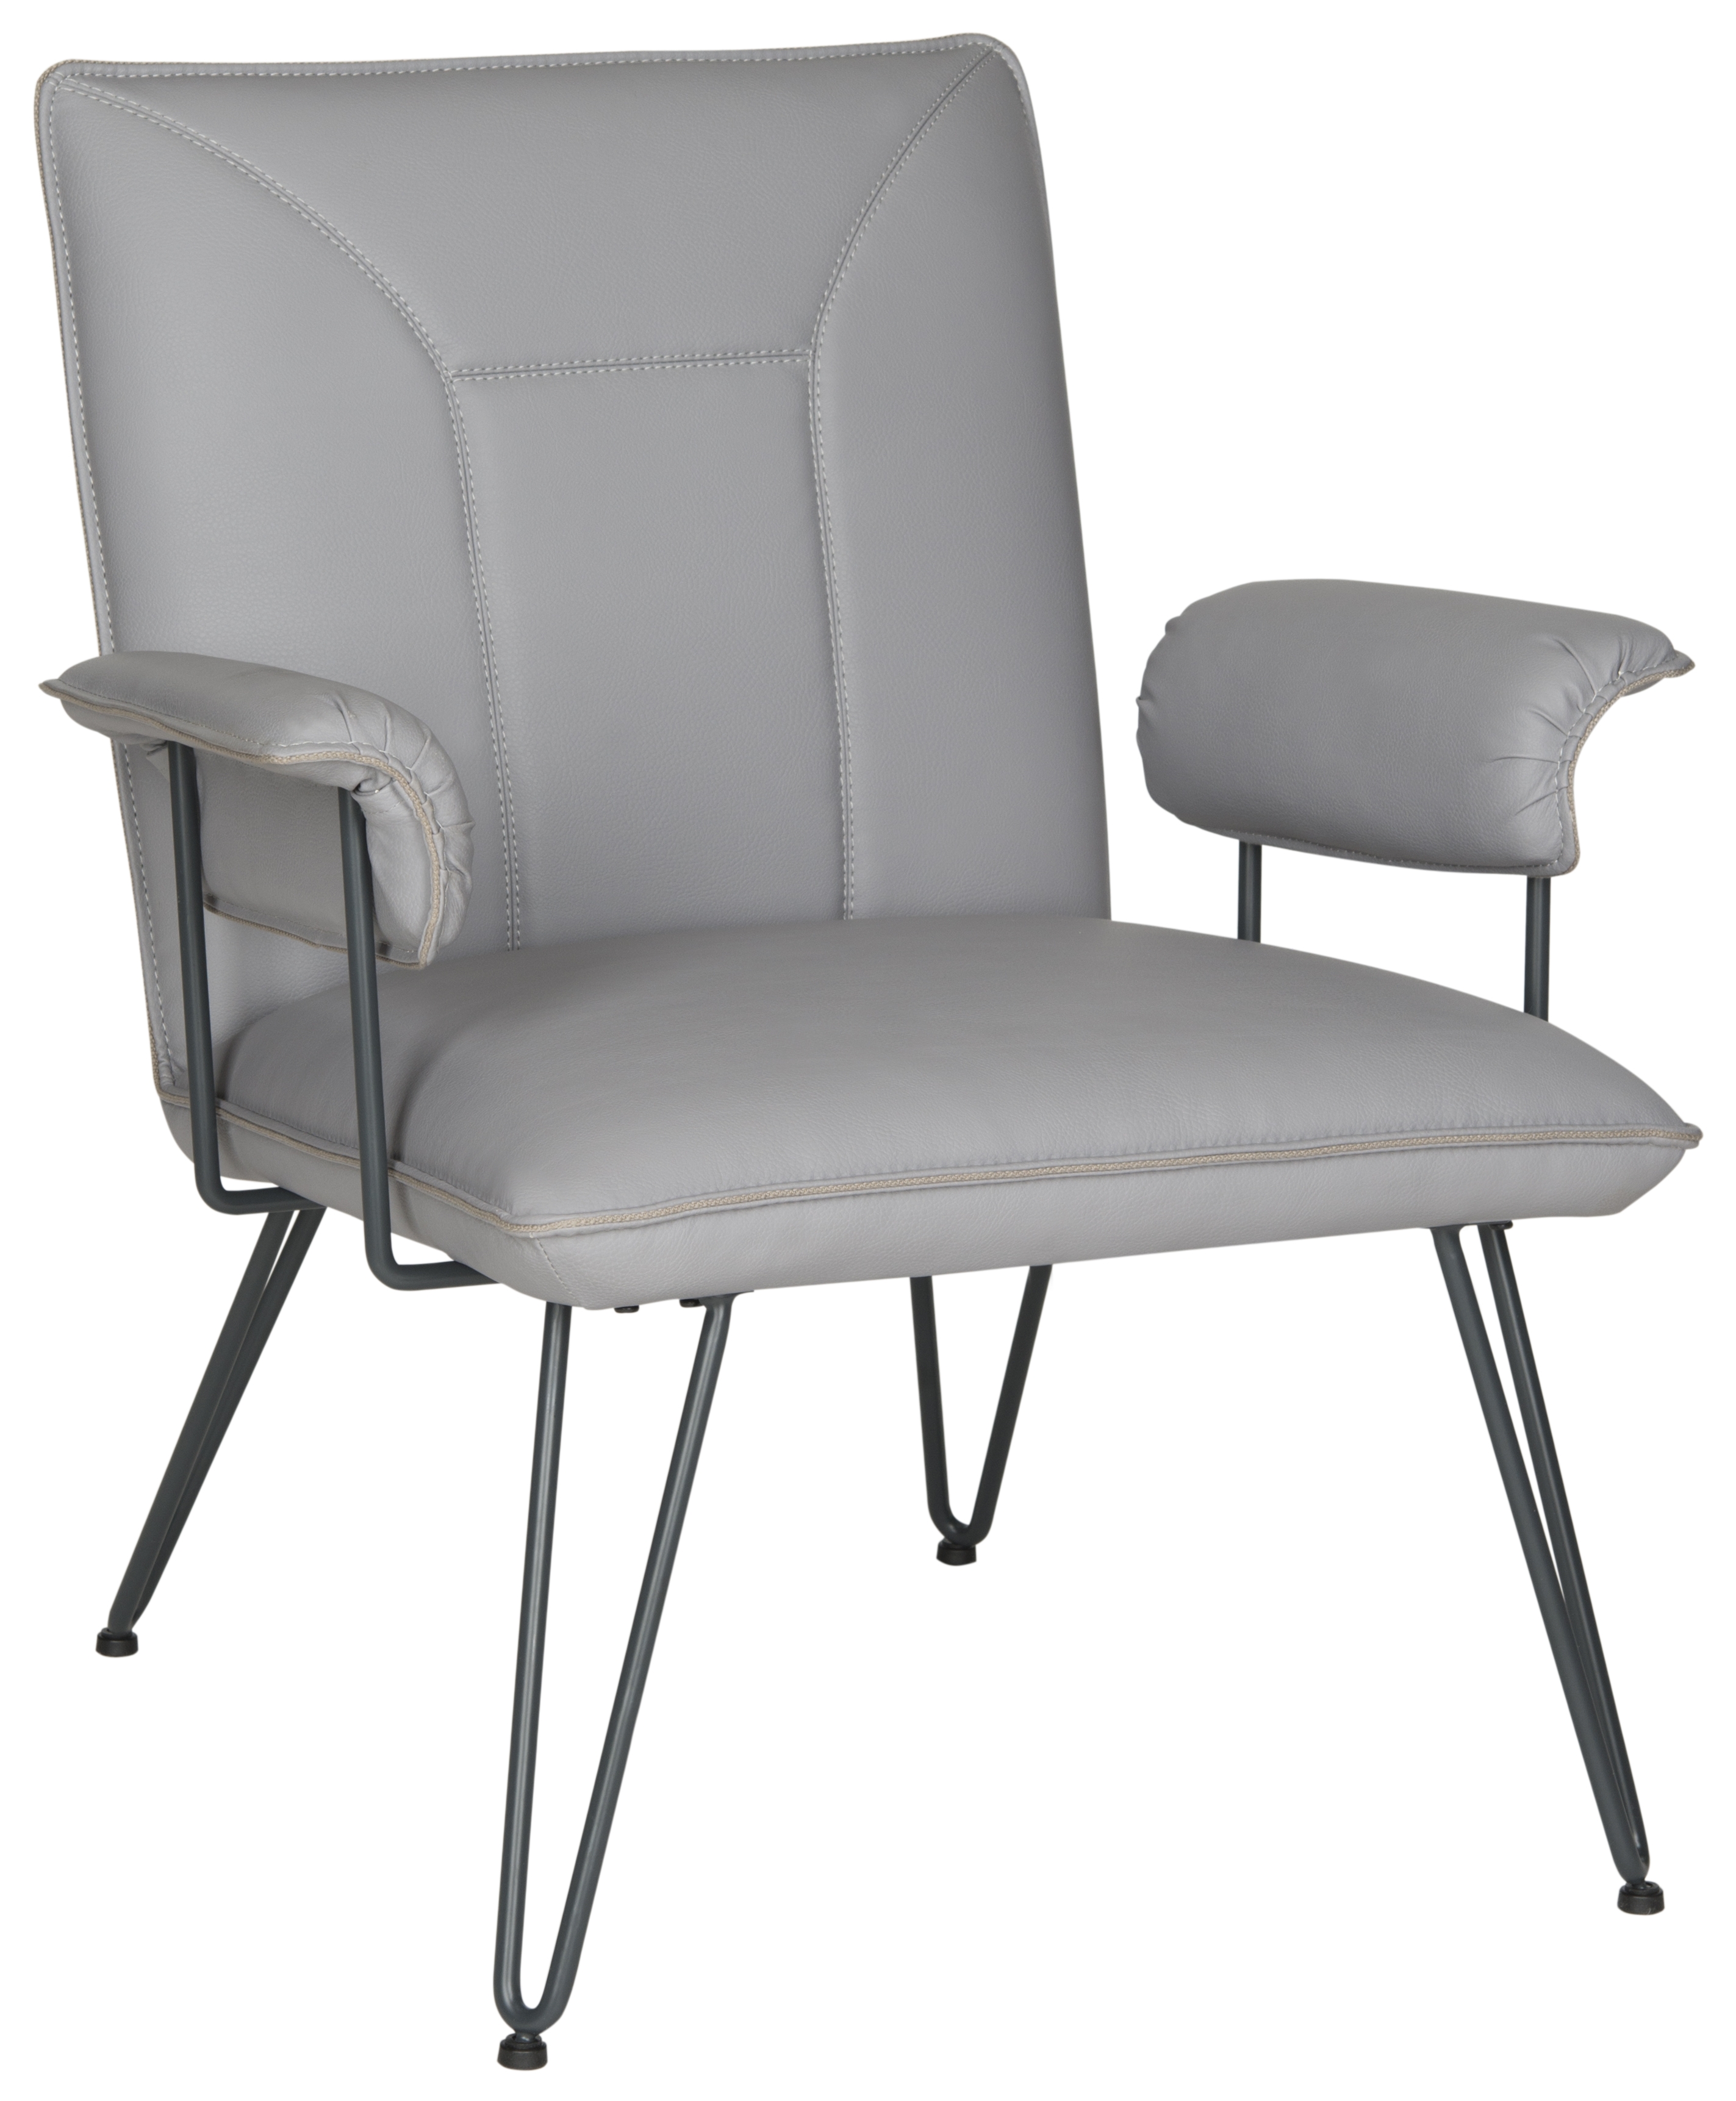 Johannes 17.3"H Mid Century Modern Leather Arm Chair - Grey/Black - Arlo Home - Image 1